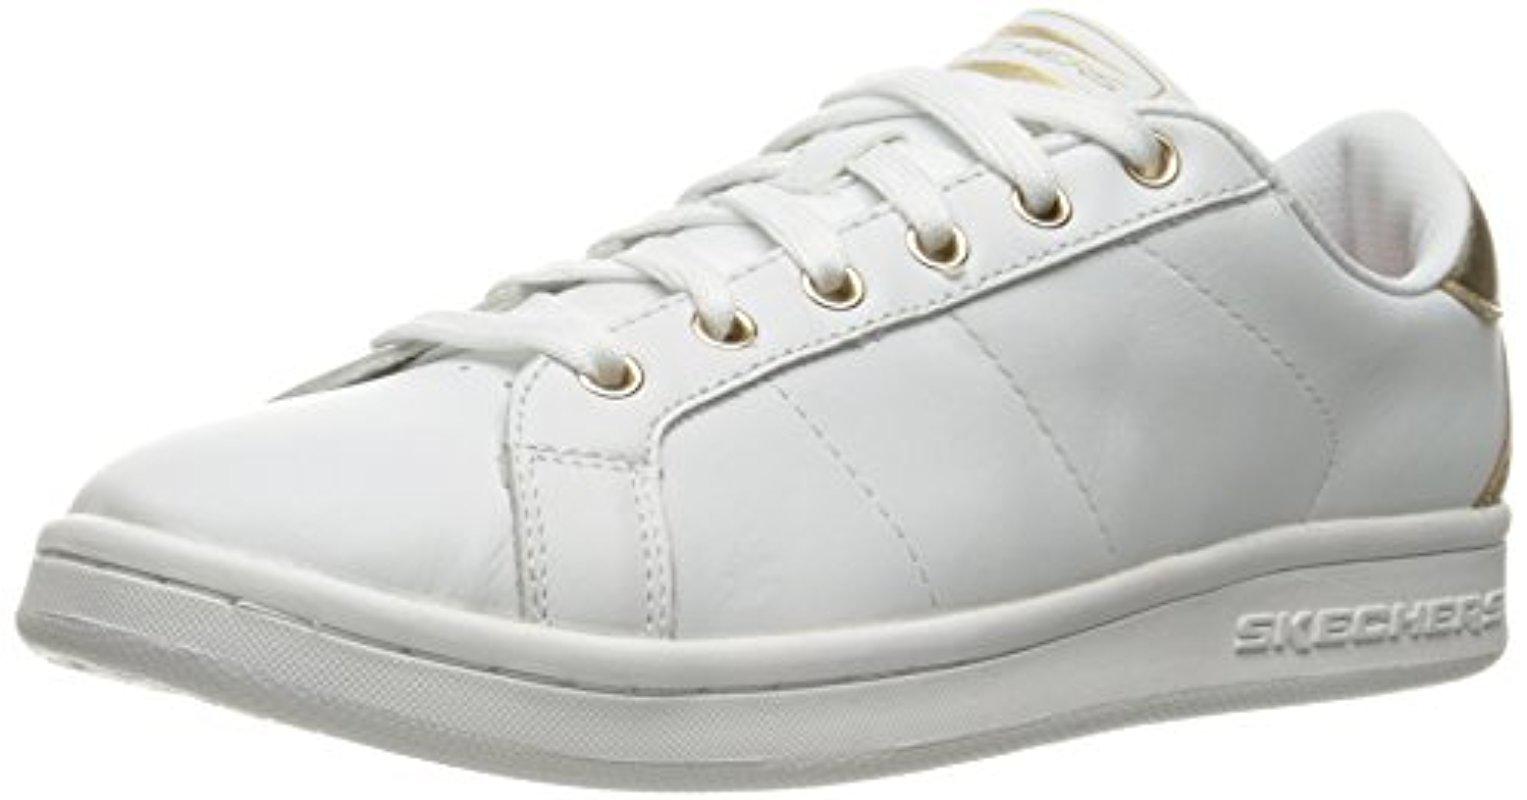 Skechers Street Onix Fashion Sneaker in White/Gold (White) - Lyst